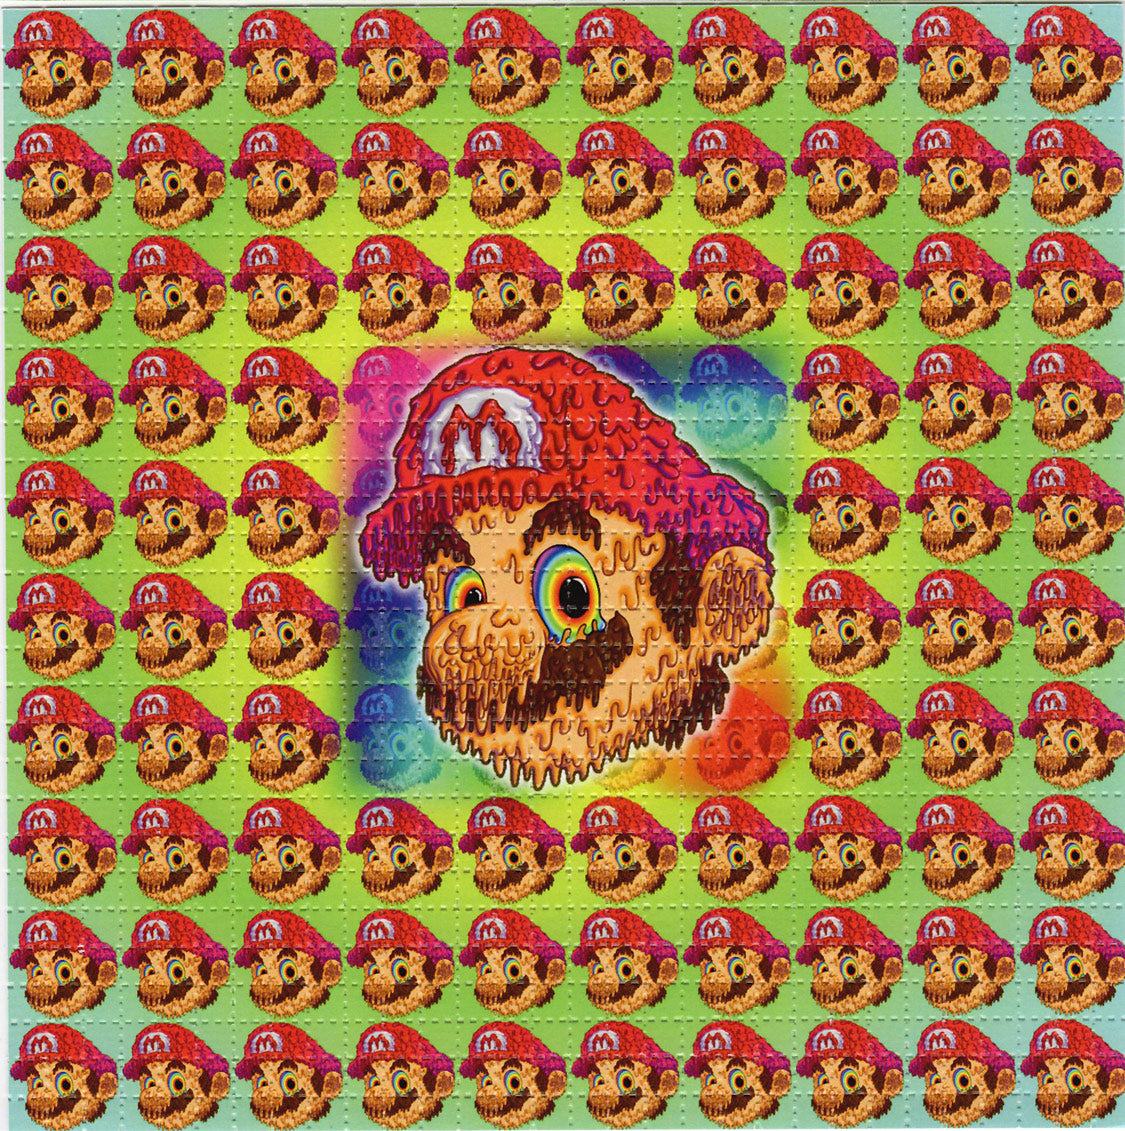 Melty Mario LSD blotter art print